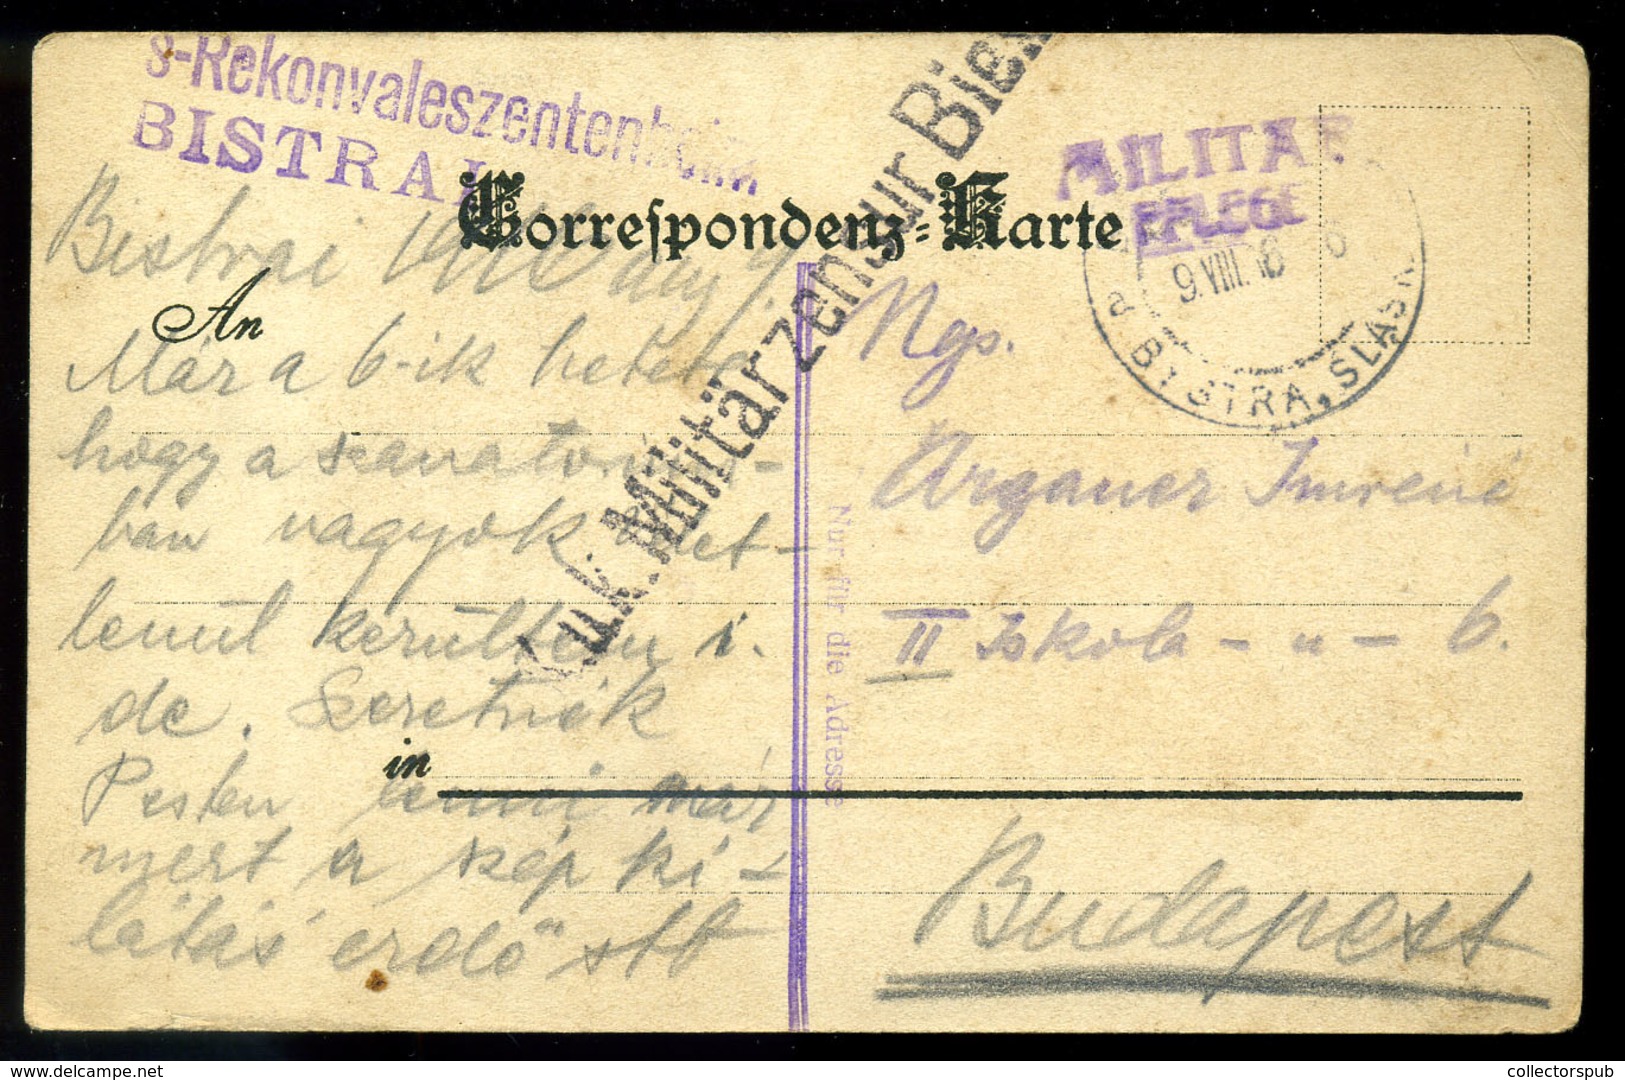 BIELITZ 1916. Képeslap, Tábori Postával - Hongarije